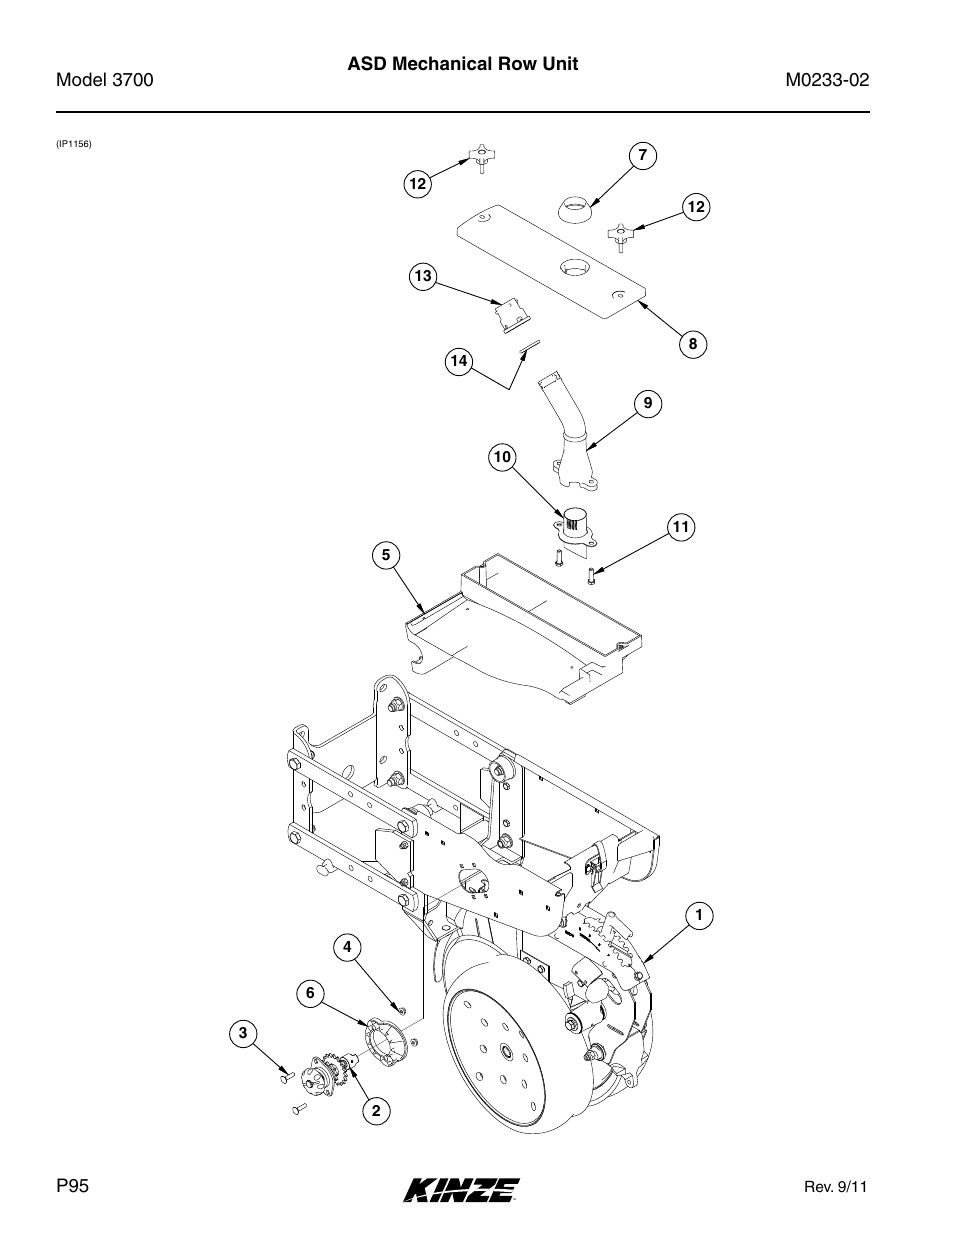 Asd mechanical row unit | Kinze 3700 Front Folding Planter Rev. 6/14 User Manual | Page 98 / 284